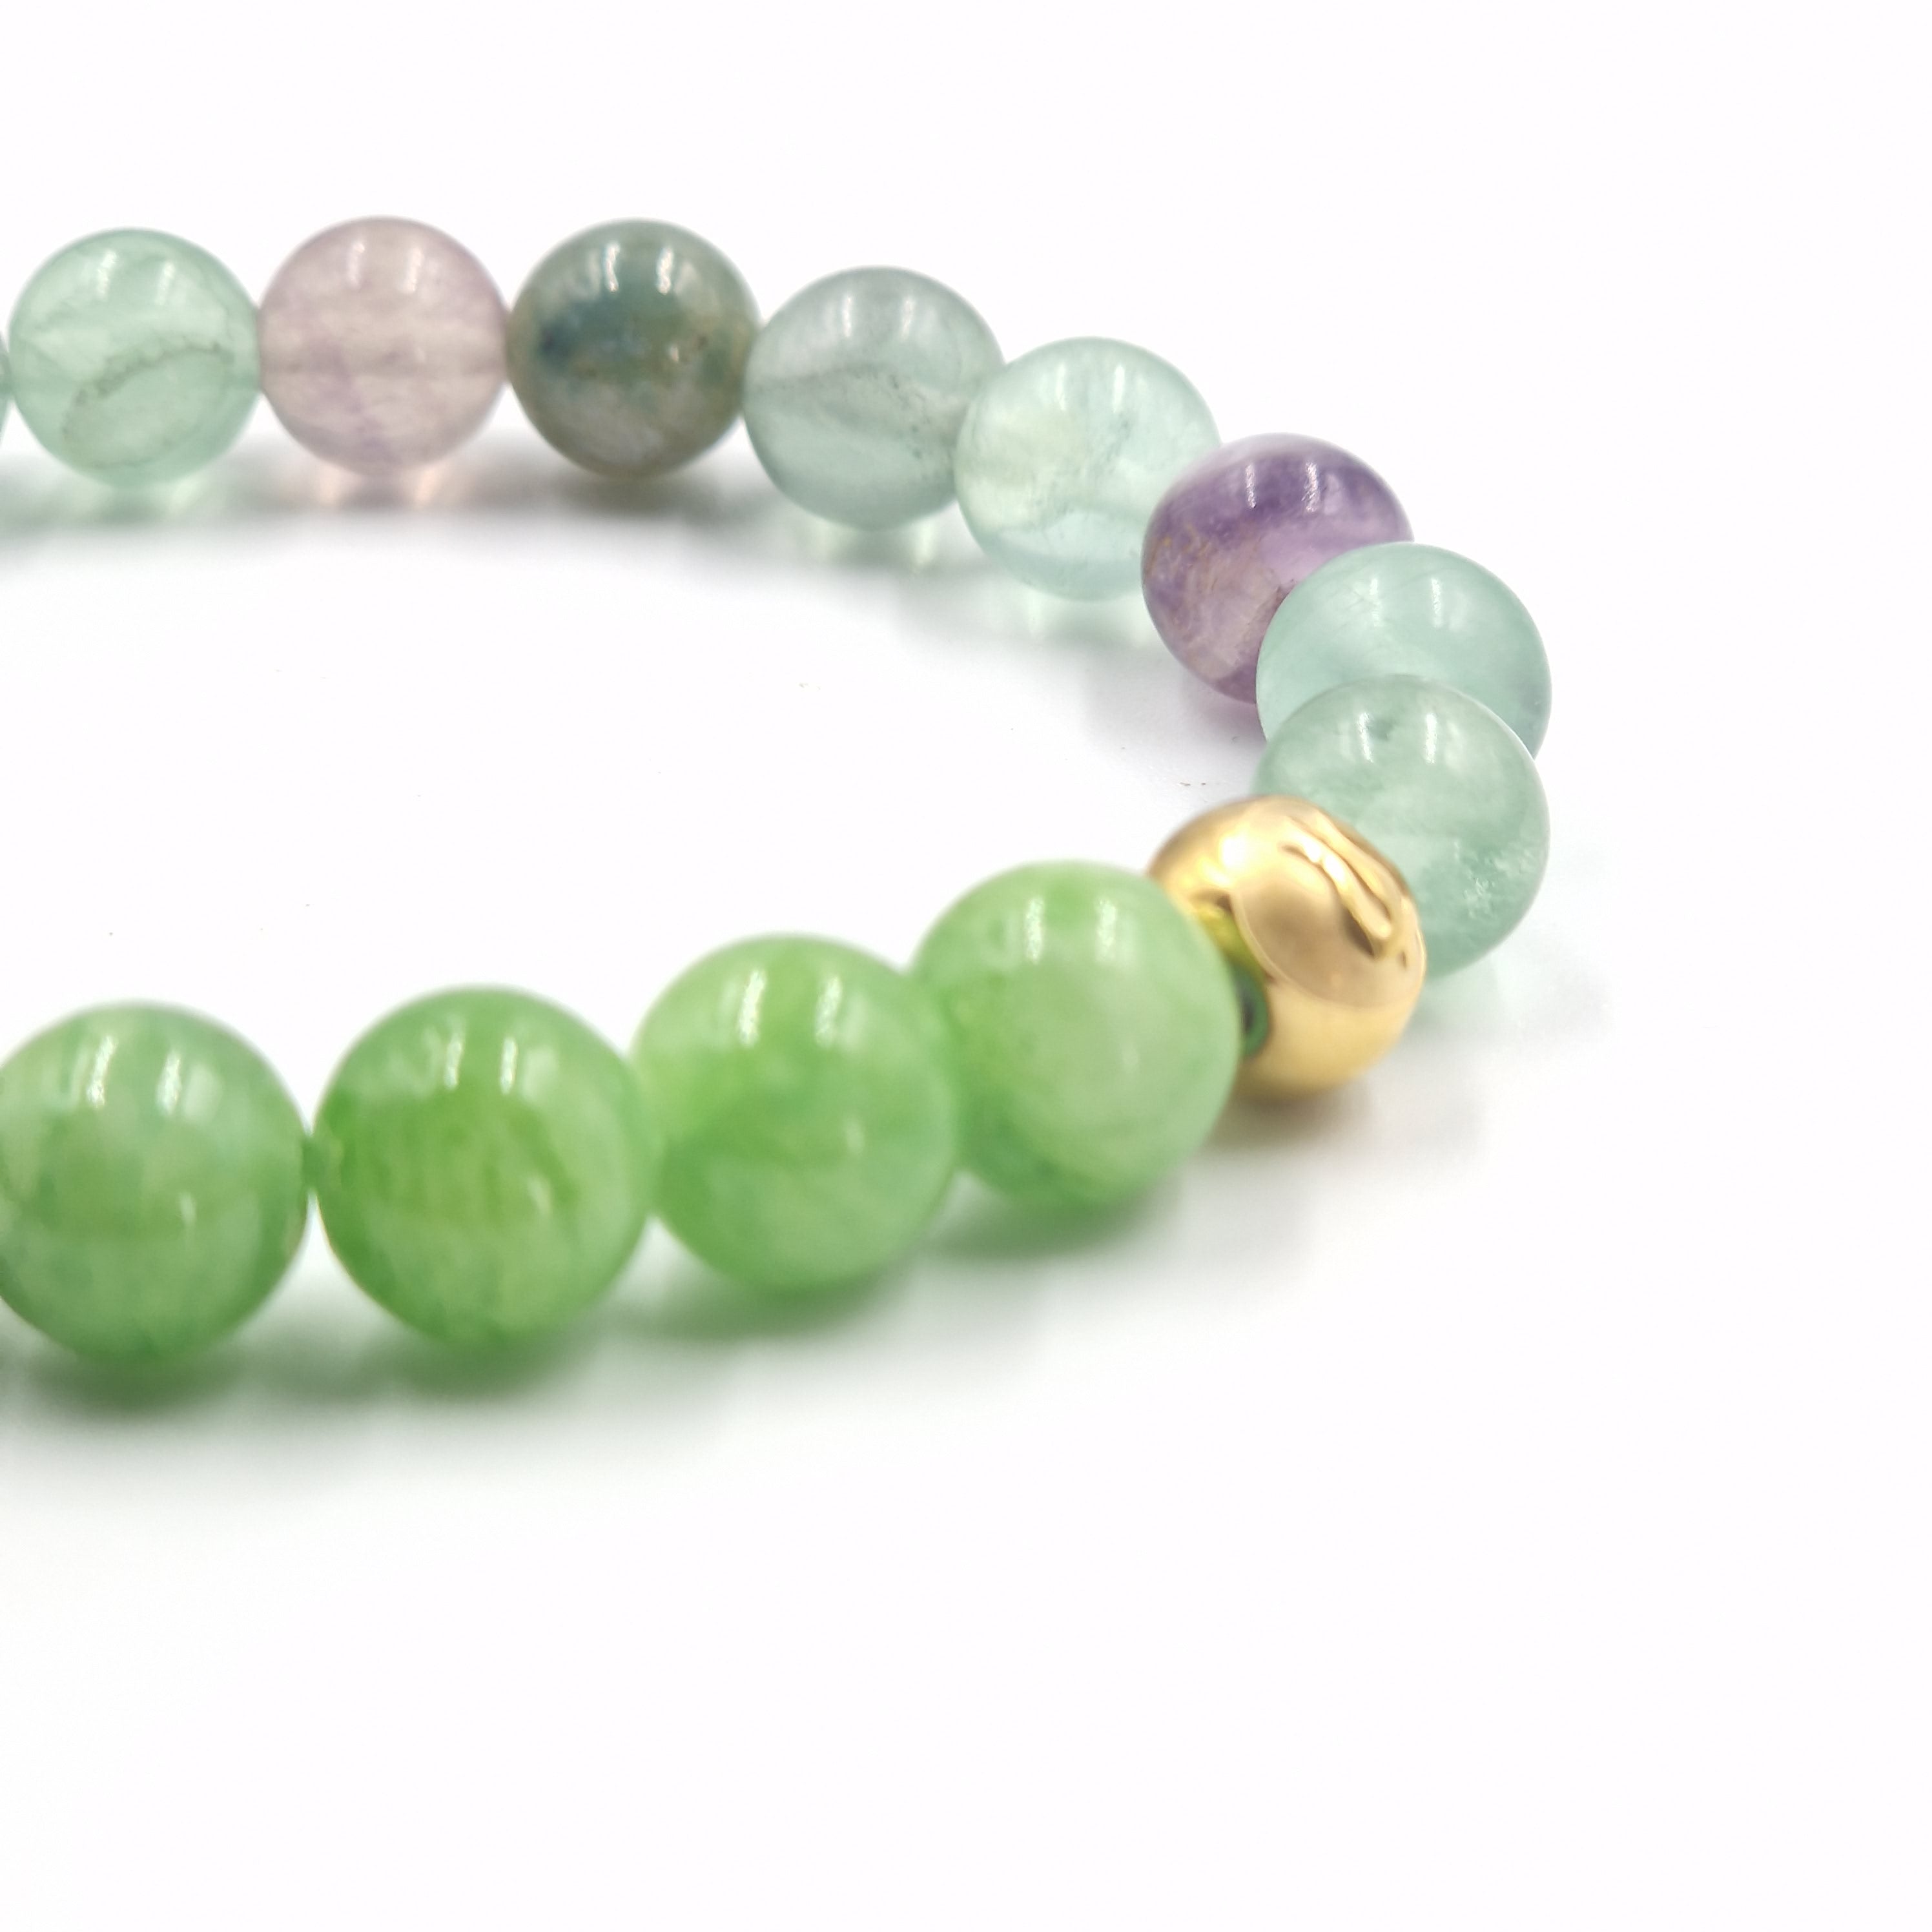 Bracelet en Fluorite violette et Jade vert